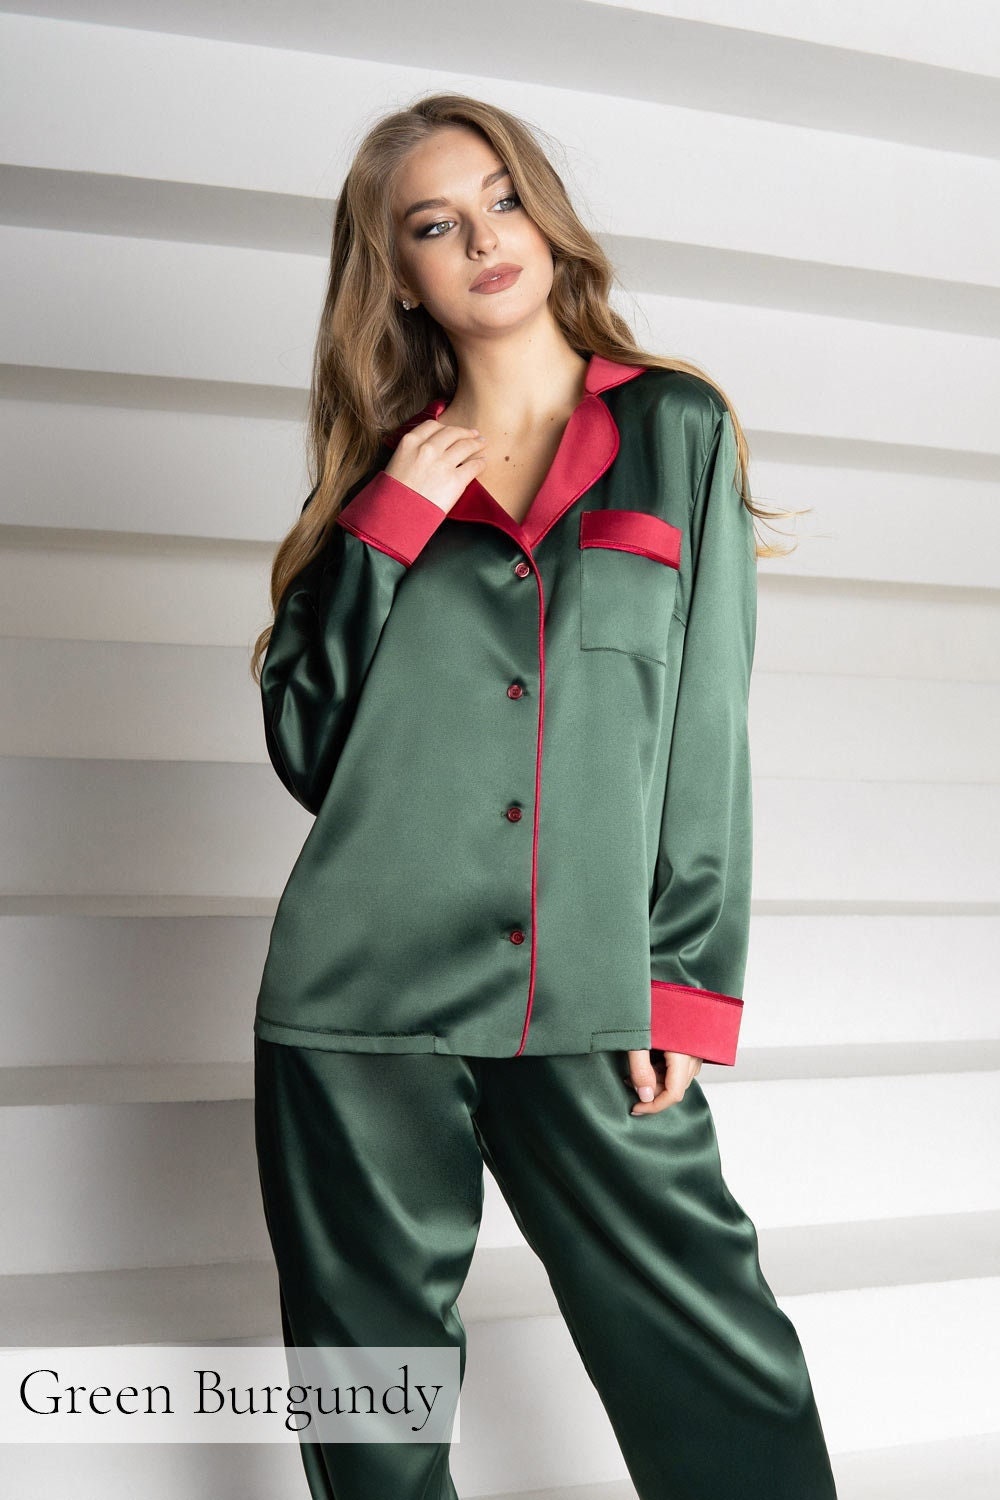  discountstore145 Men Imitation Silk Pajama Set Print